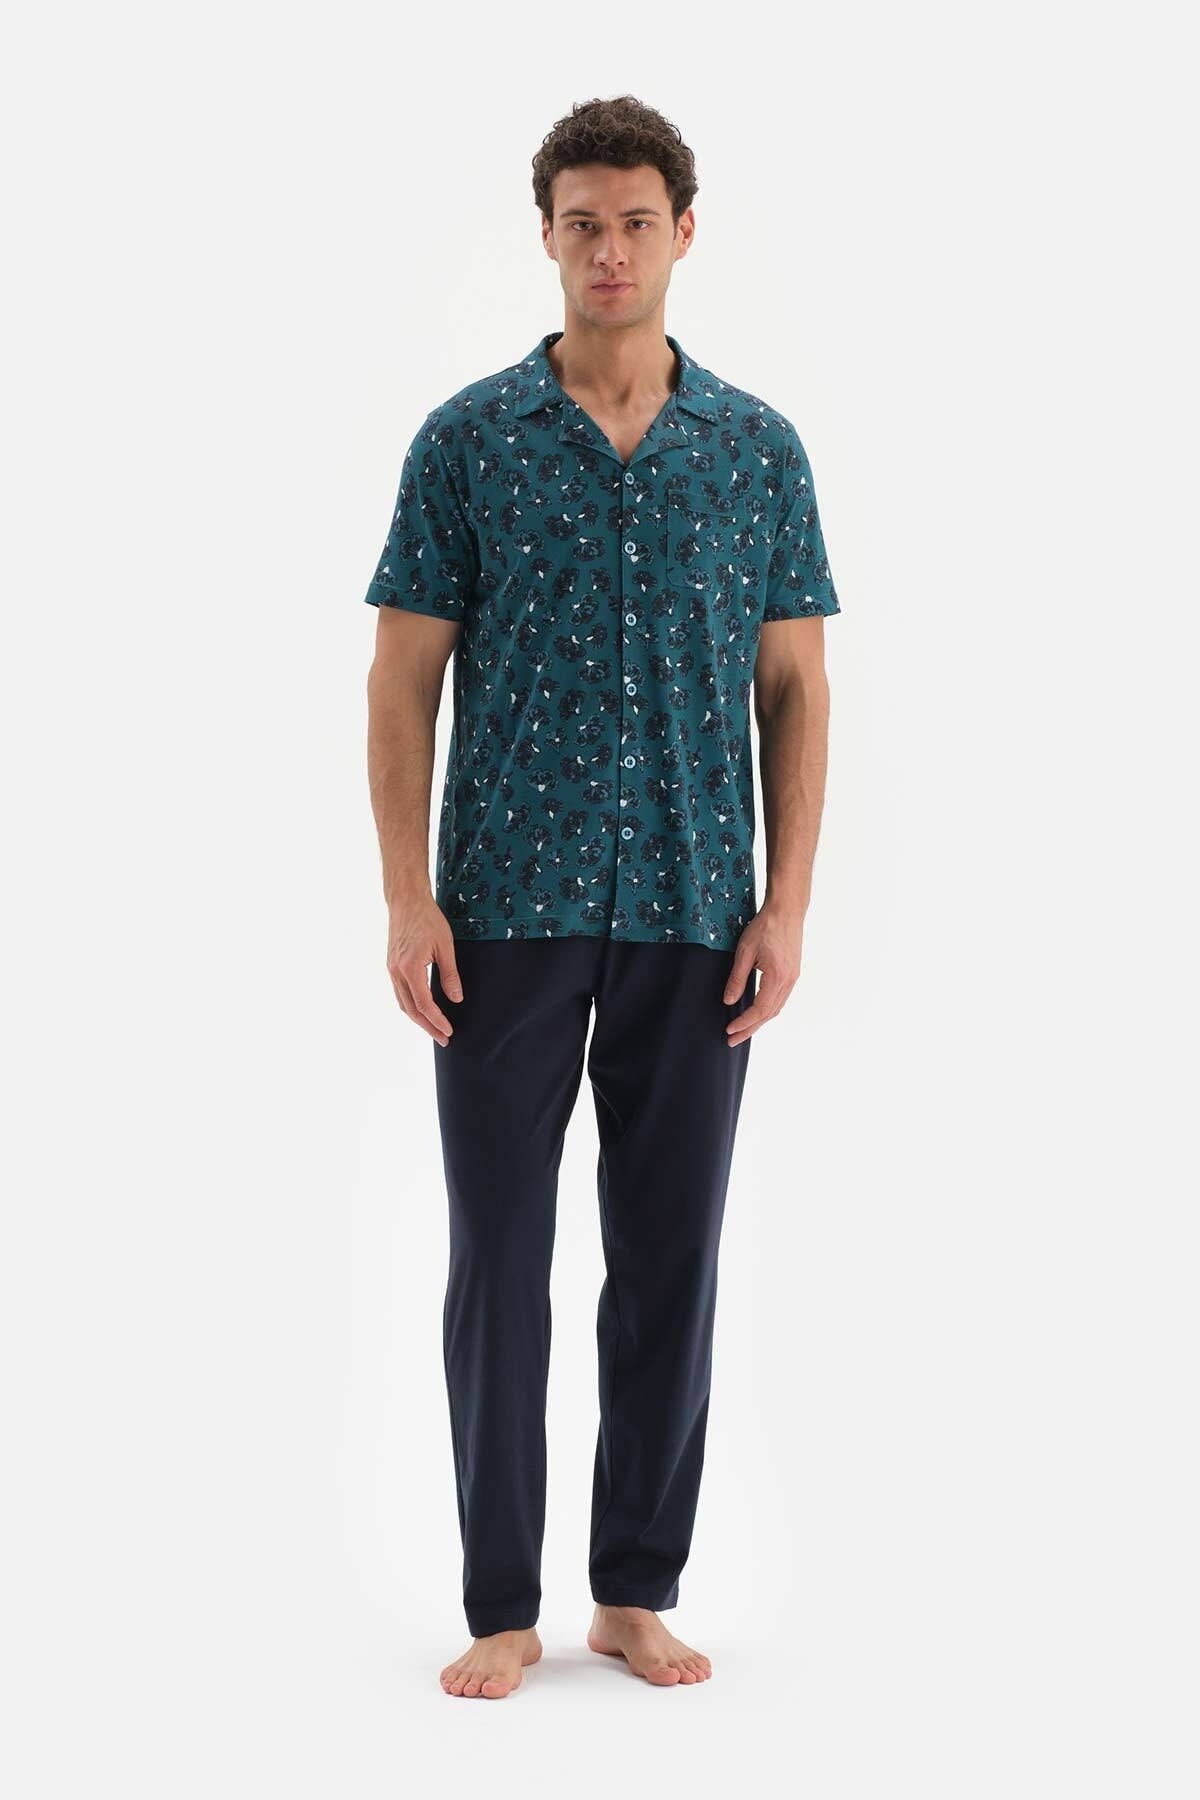 Dagi Oil Green Shirt Collar Patterned Top Knitted Pajama Set